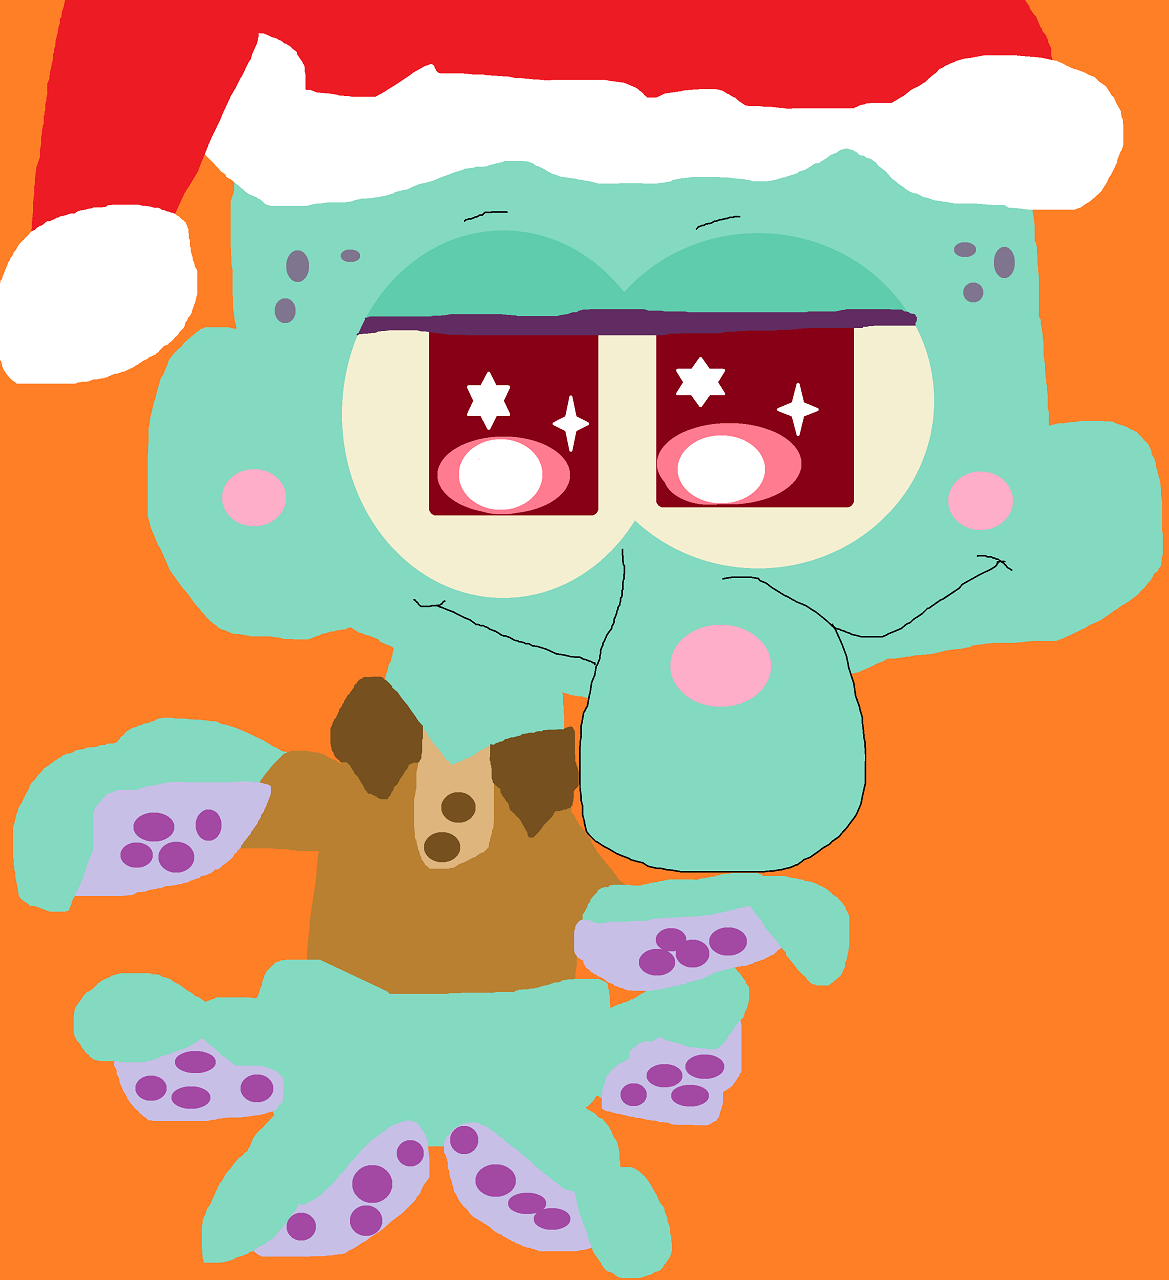 Squidward Holiday Squishable Based On My New Plush by Falconlobo